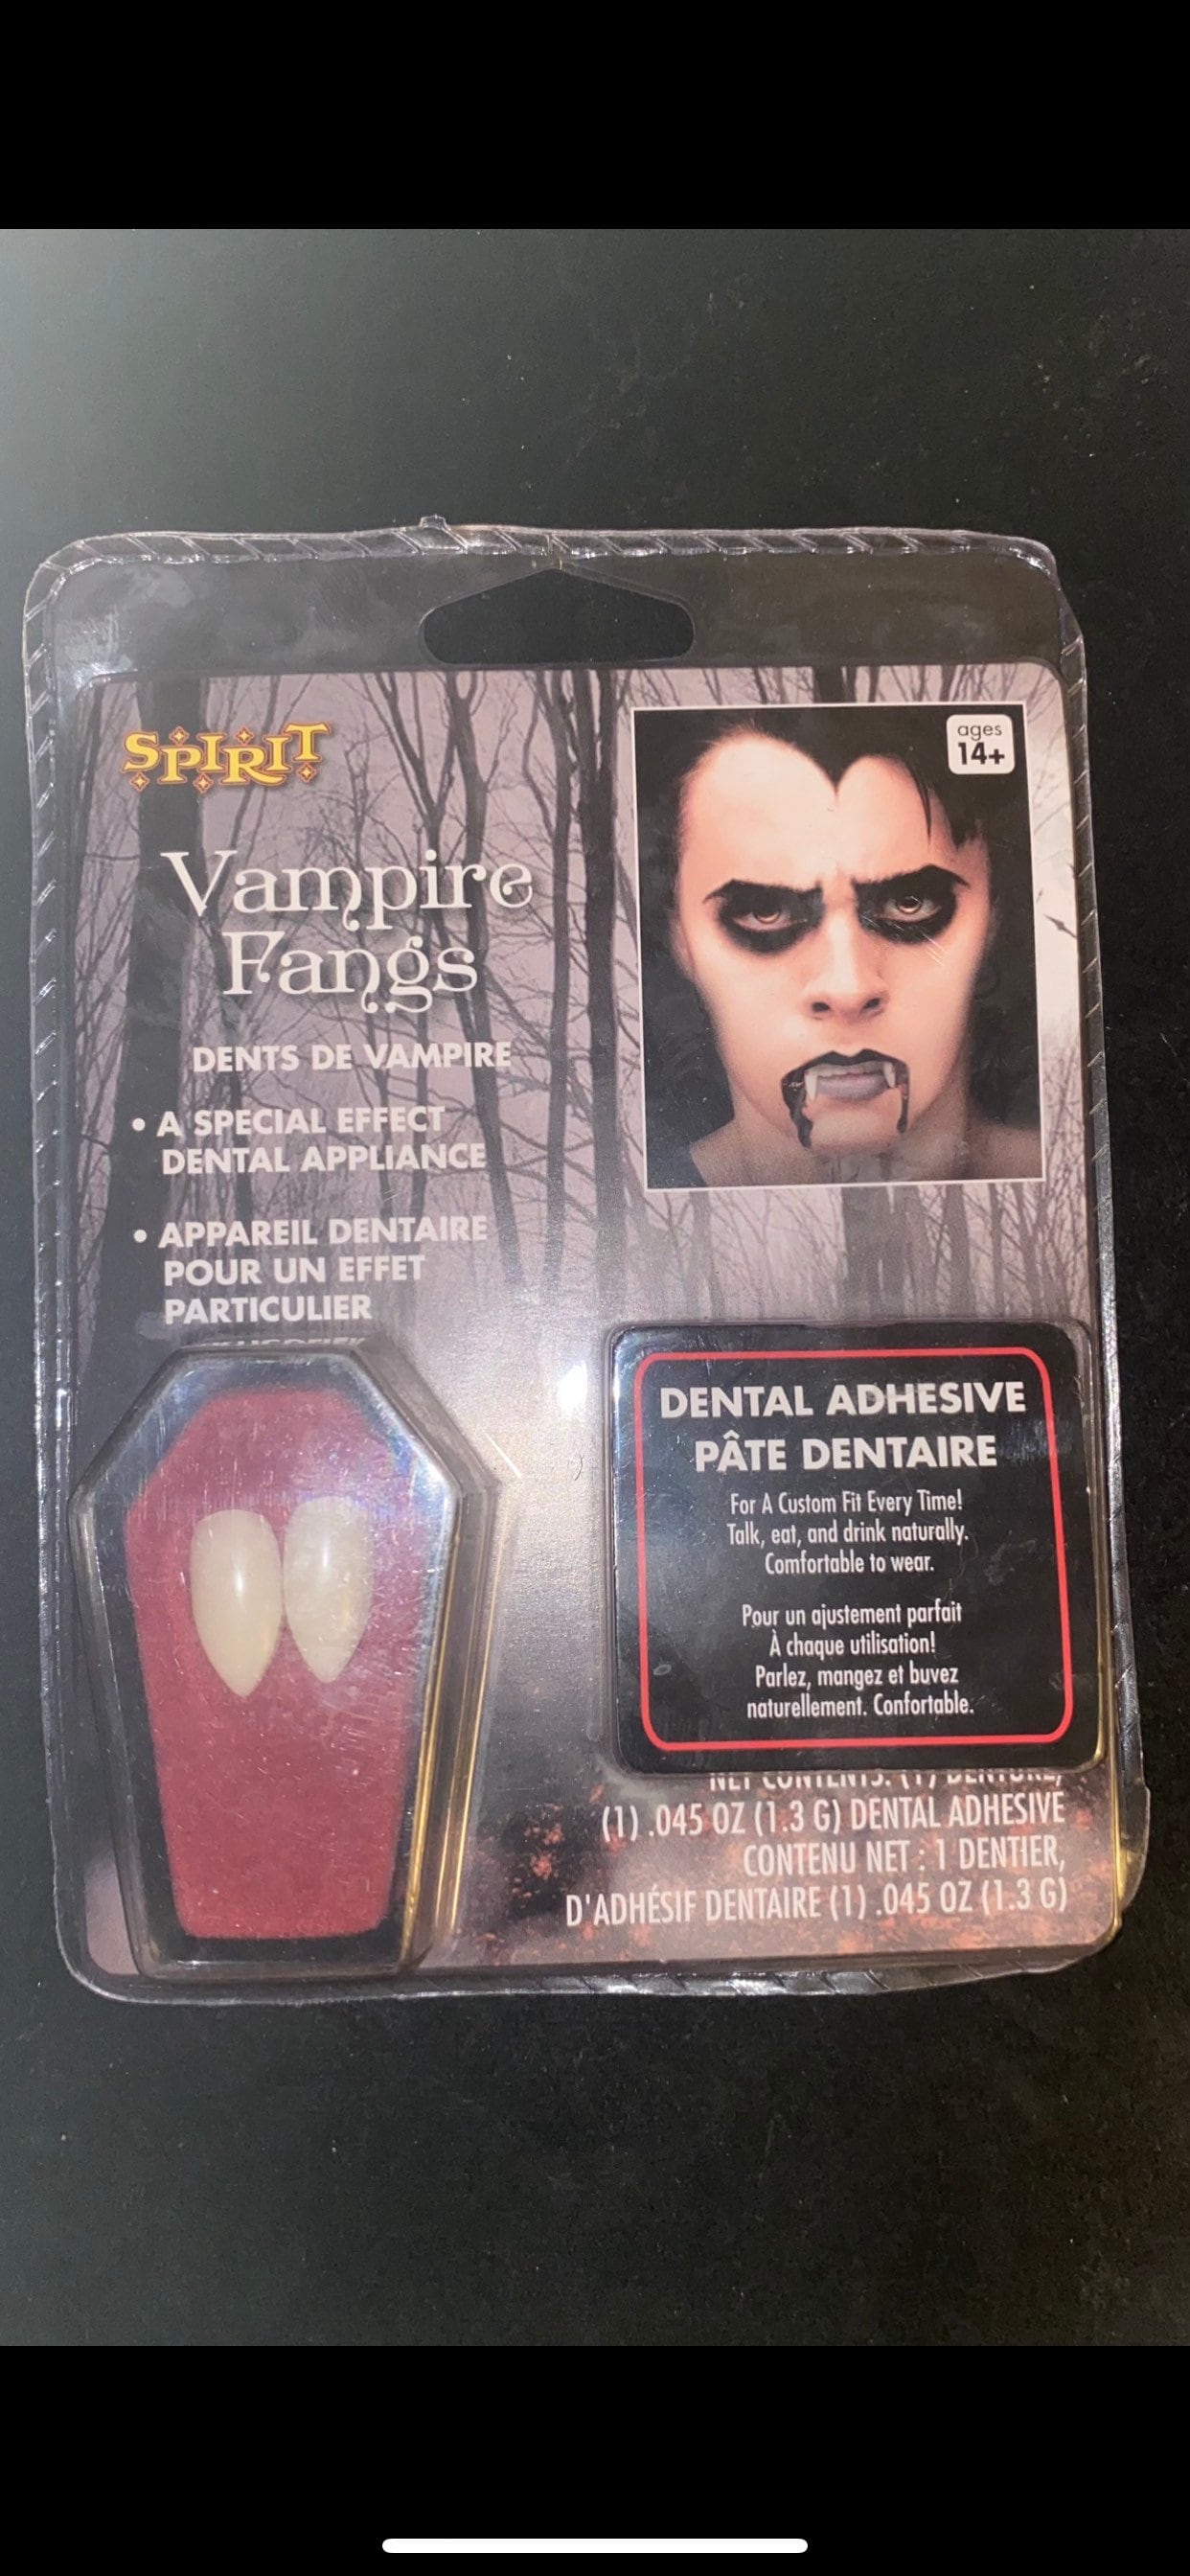 Retractable Vampire Fangs Accessory - Dracula Teeth - Halloween Spirit -  under $20